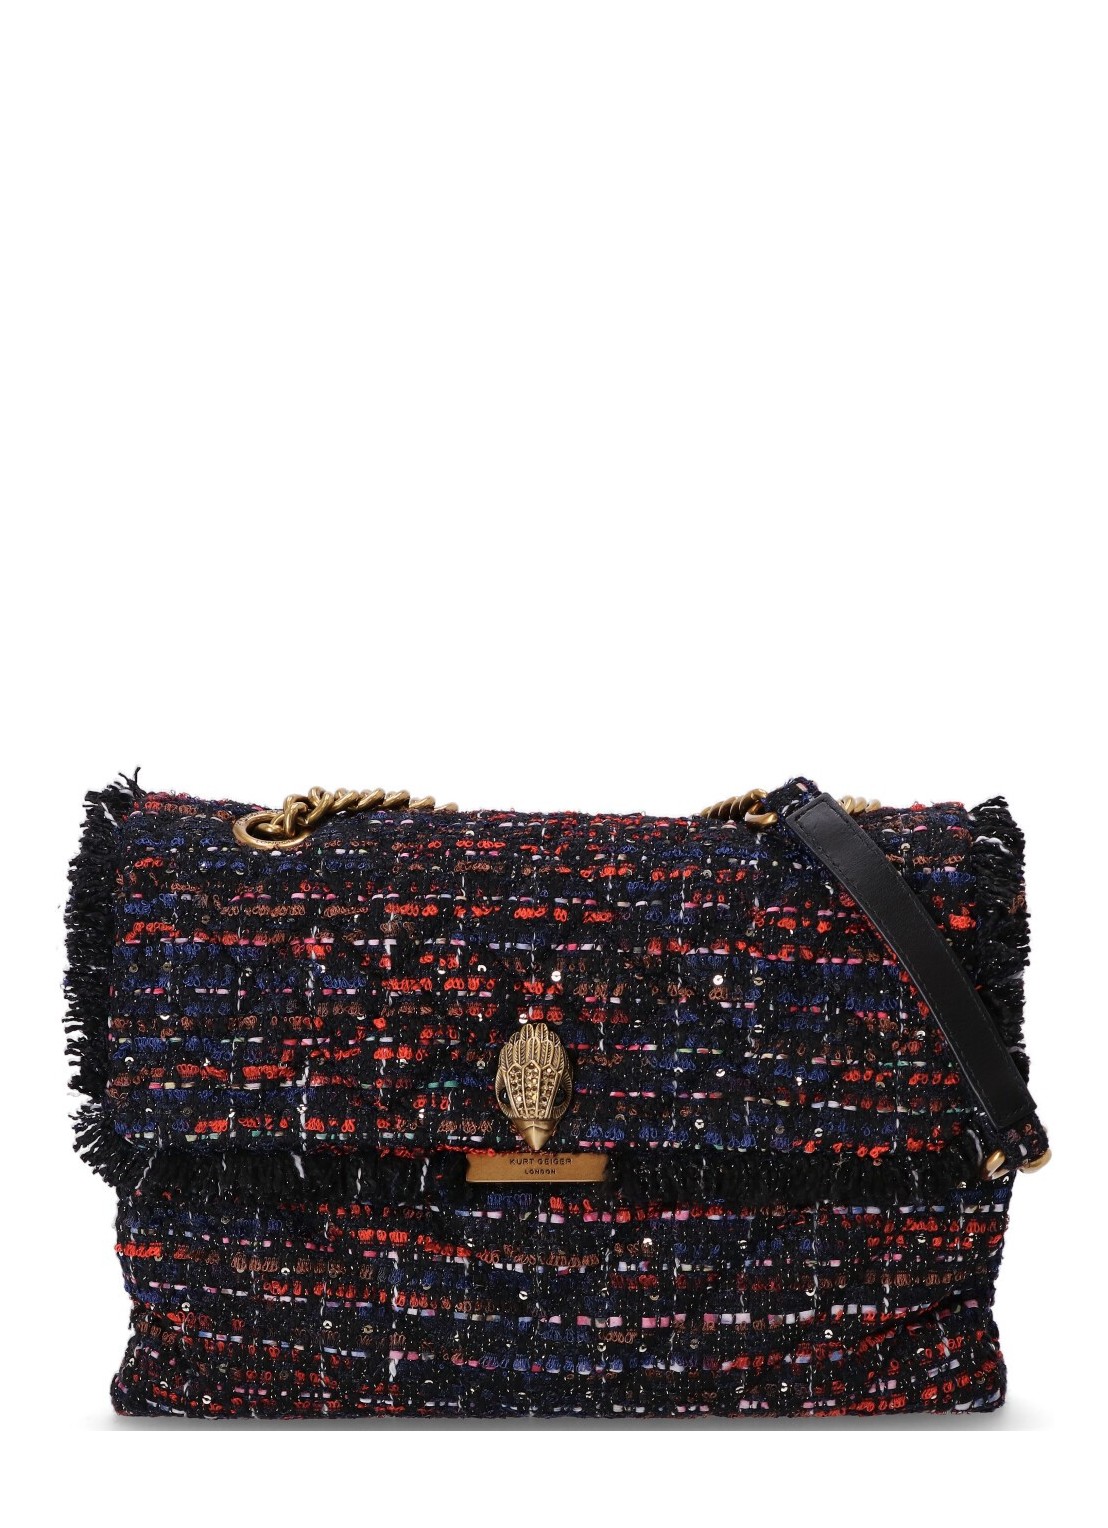 Handbag kurt geiger handbag woman tweed lg kensington x bag 1595755609 55 talla multi
 